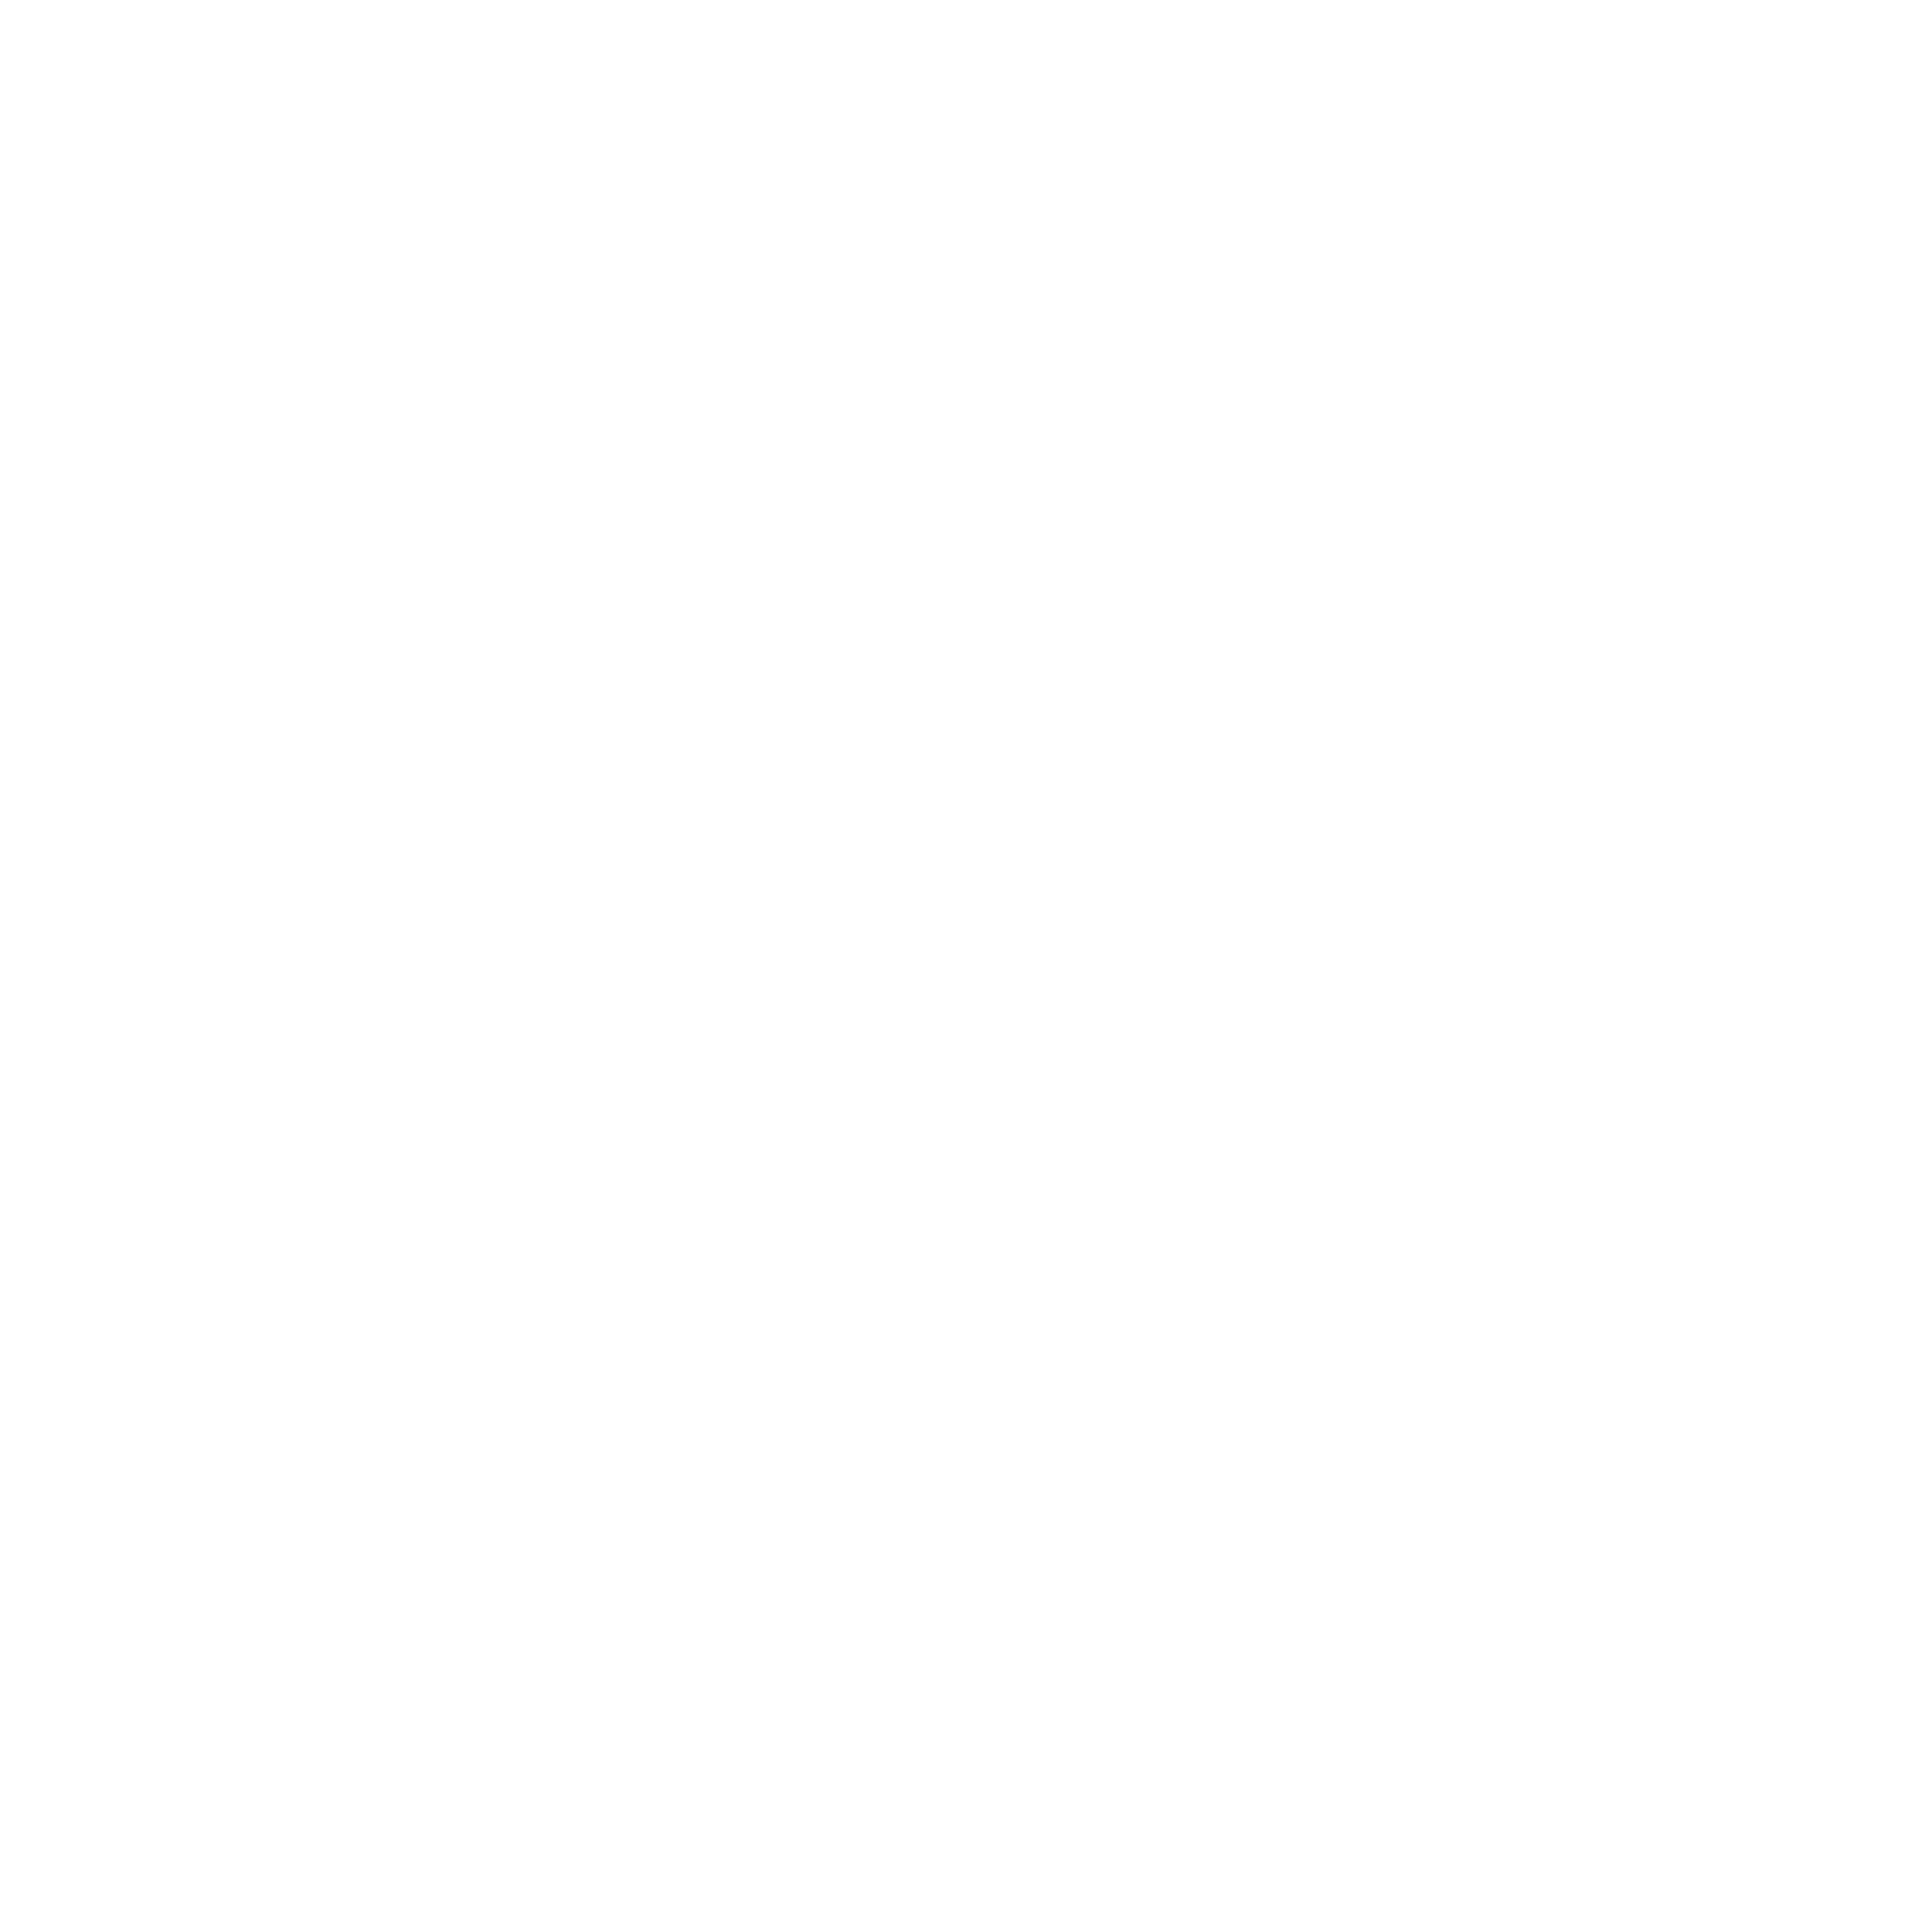 Black Dell Logo - Dell Logo PNG Transparent & SVG Vector - Freebie Supply